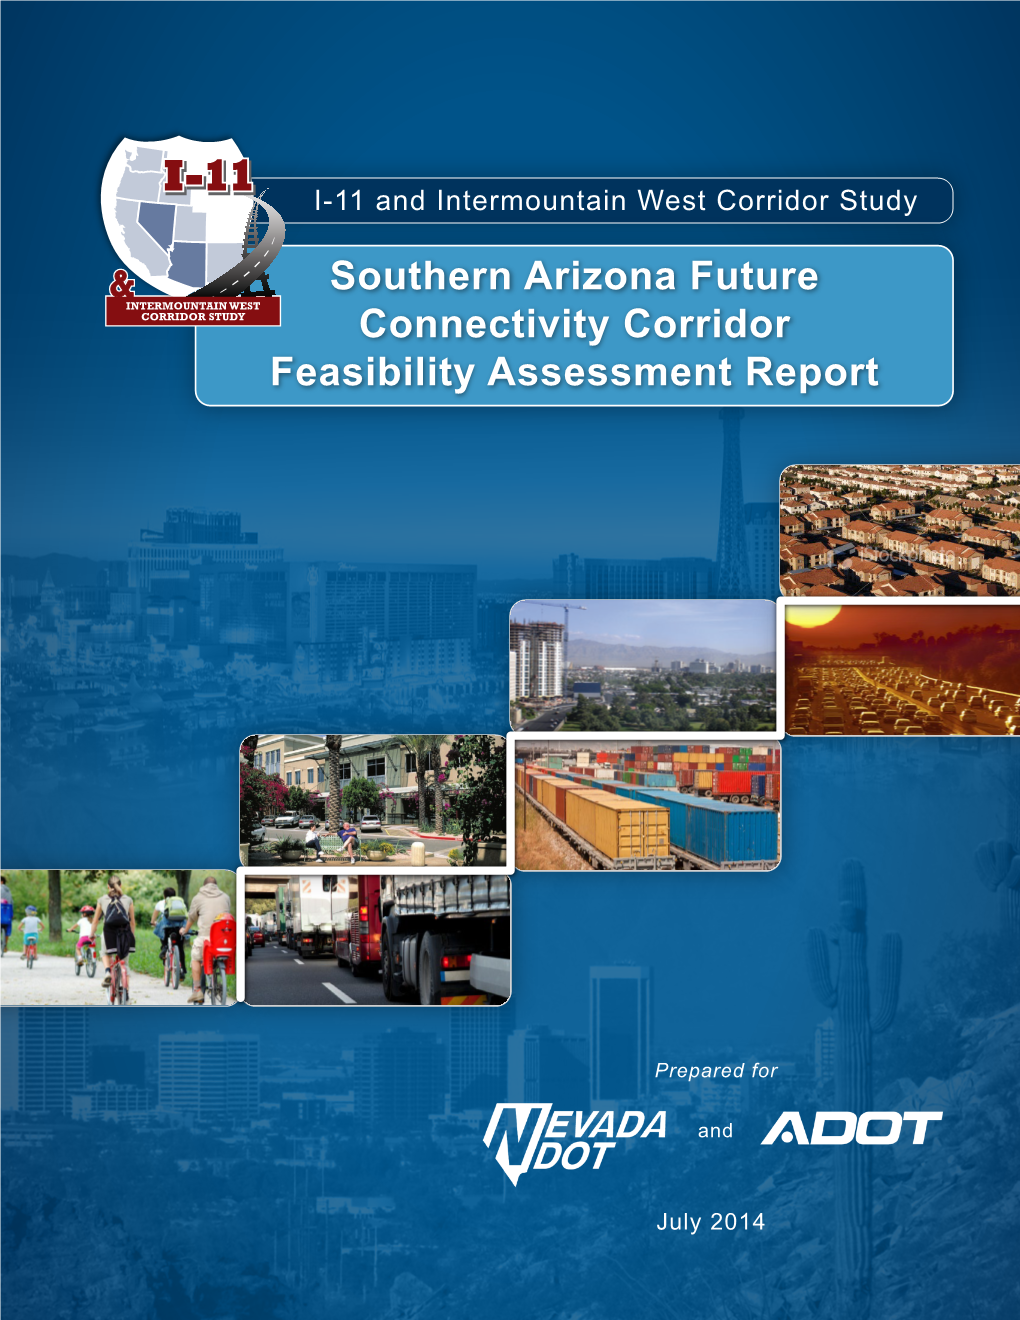 Southern Arizona Future Connectivity Corridor Feasibility Assessment Report